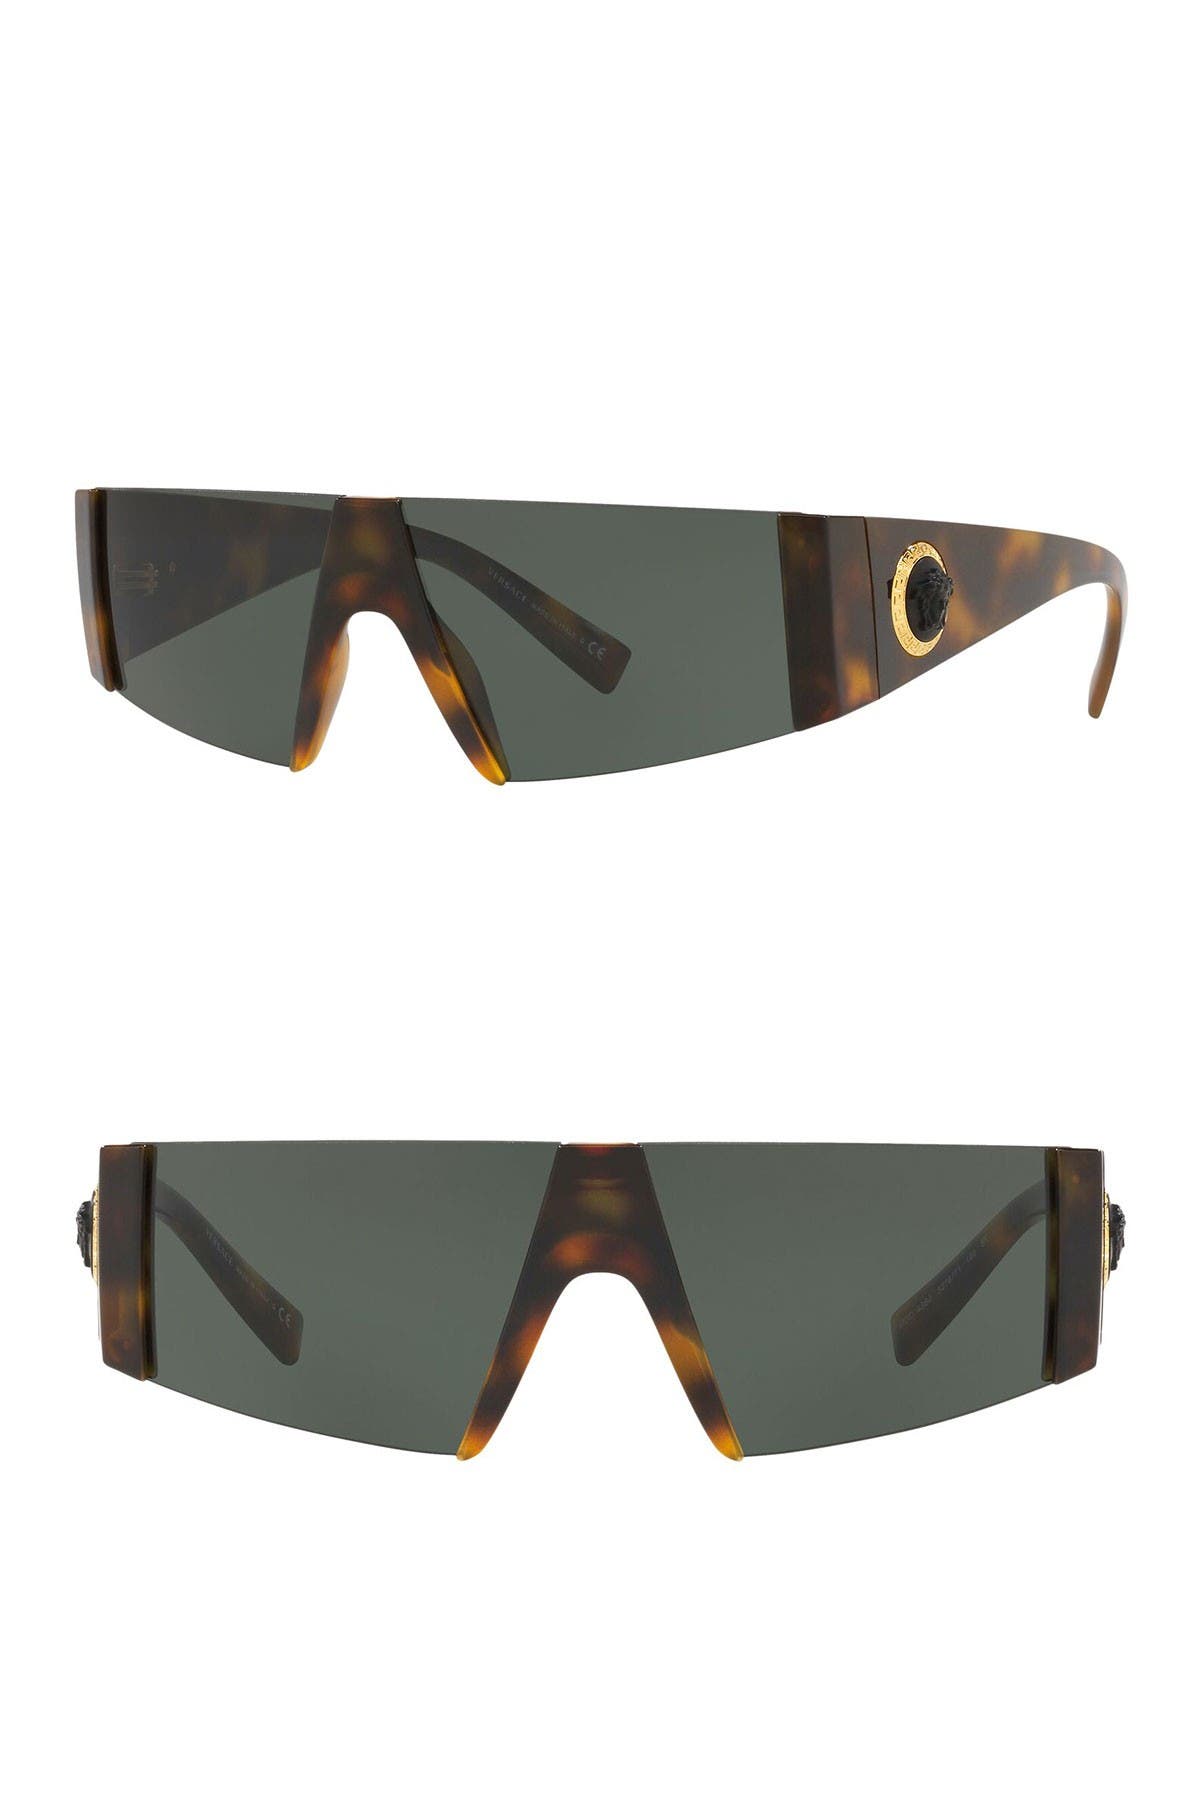 versace medusa shield sunglasses